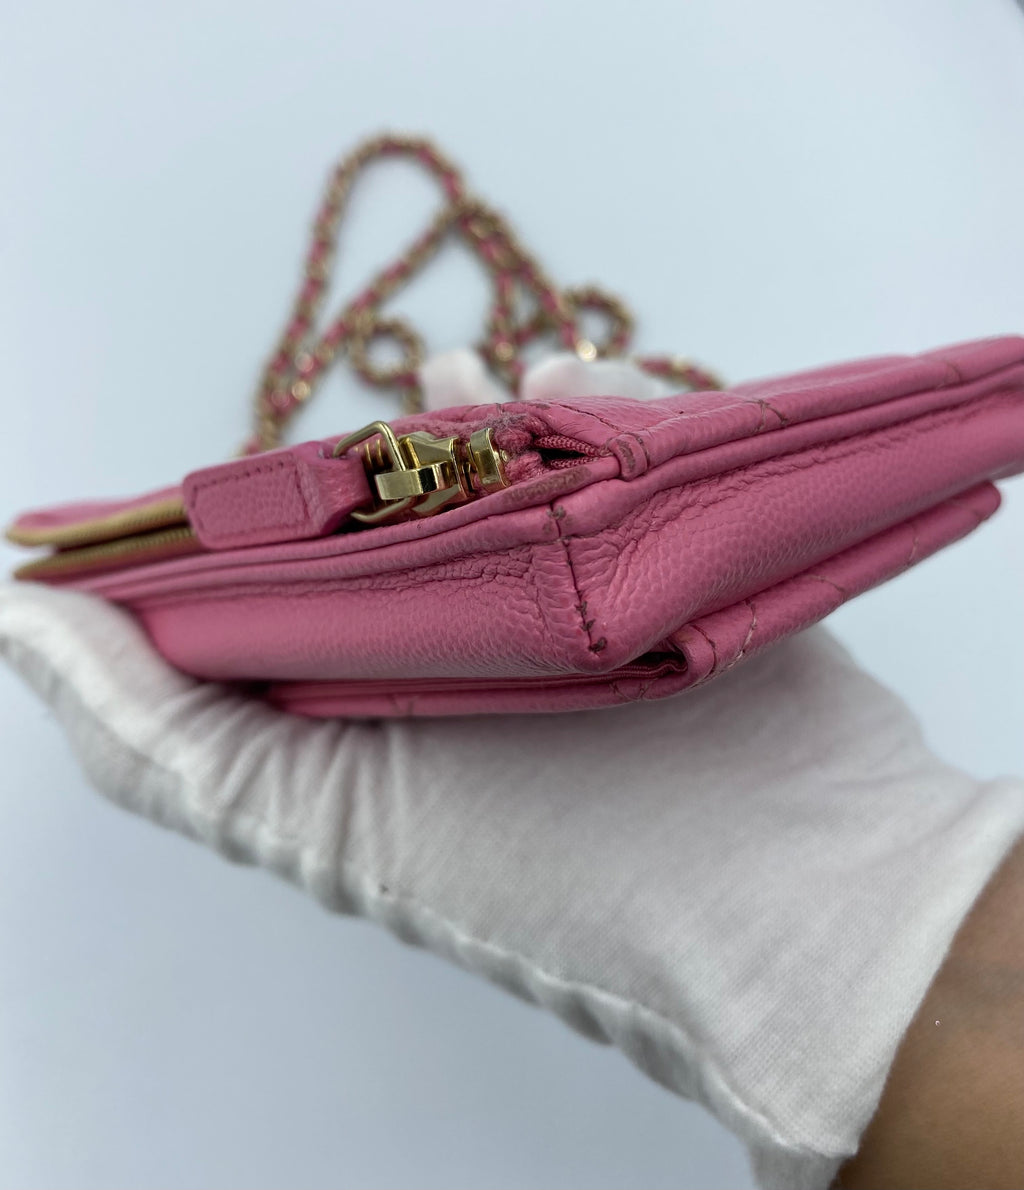 Chanel Black Classic Wallet on Chain Woc Shoulder Bag Crossbody k89